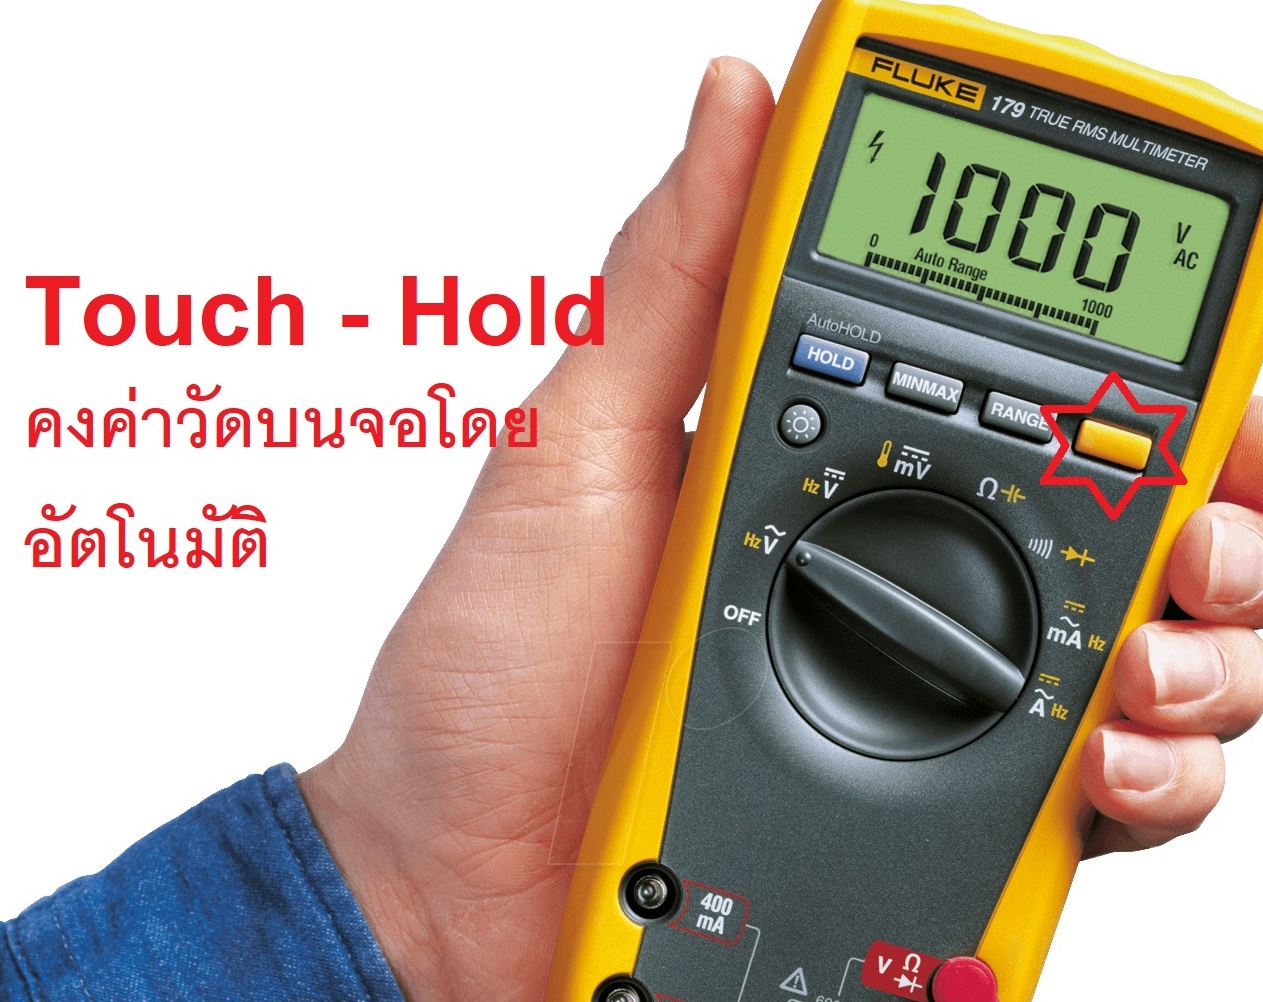 Touch Hold - คงค่าวัดบนจอโดยอัตโนมัติ